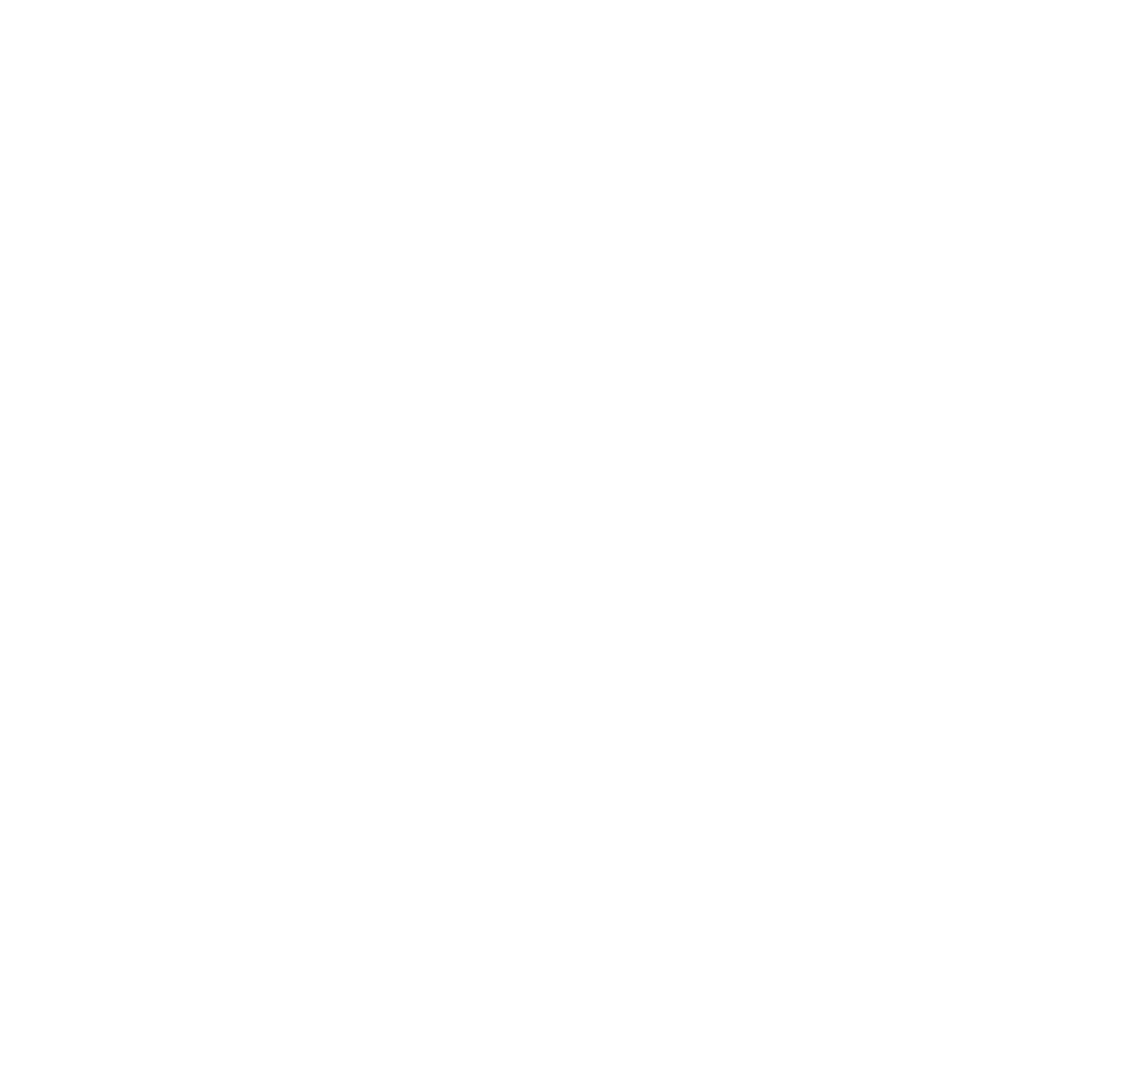 The Pickeled Herring